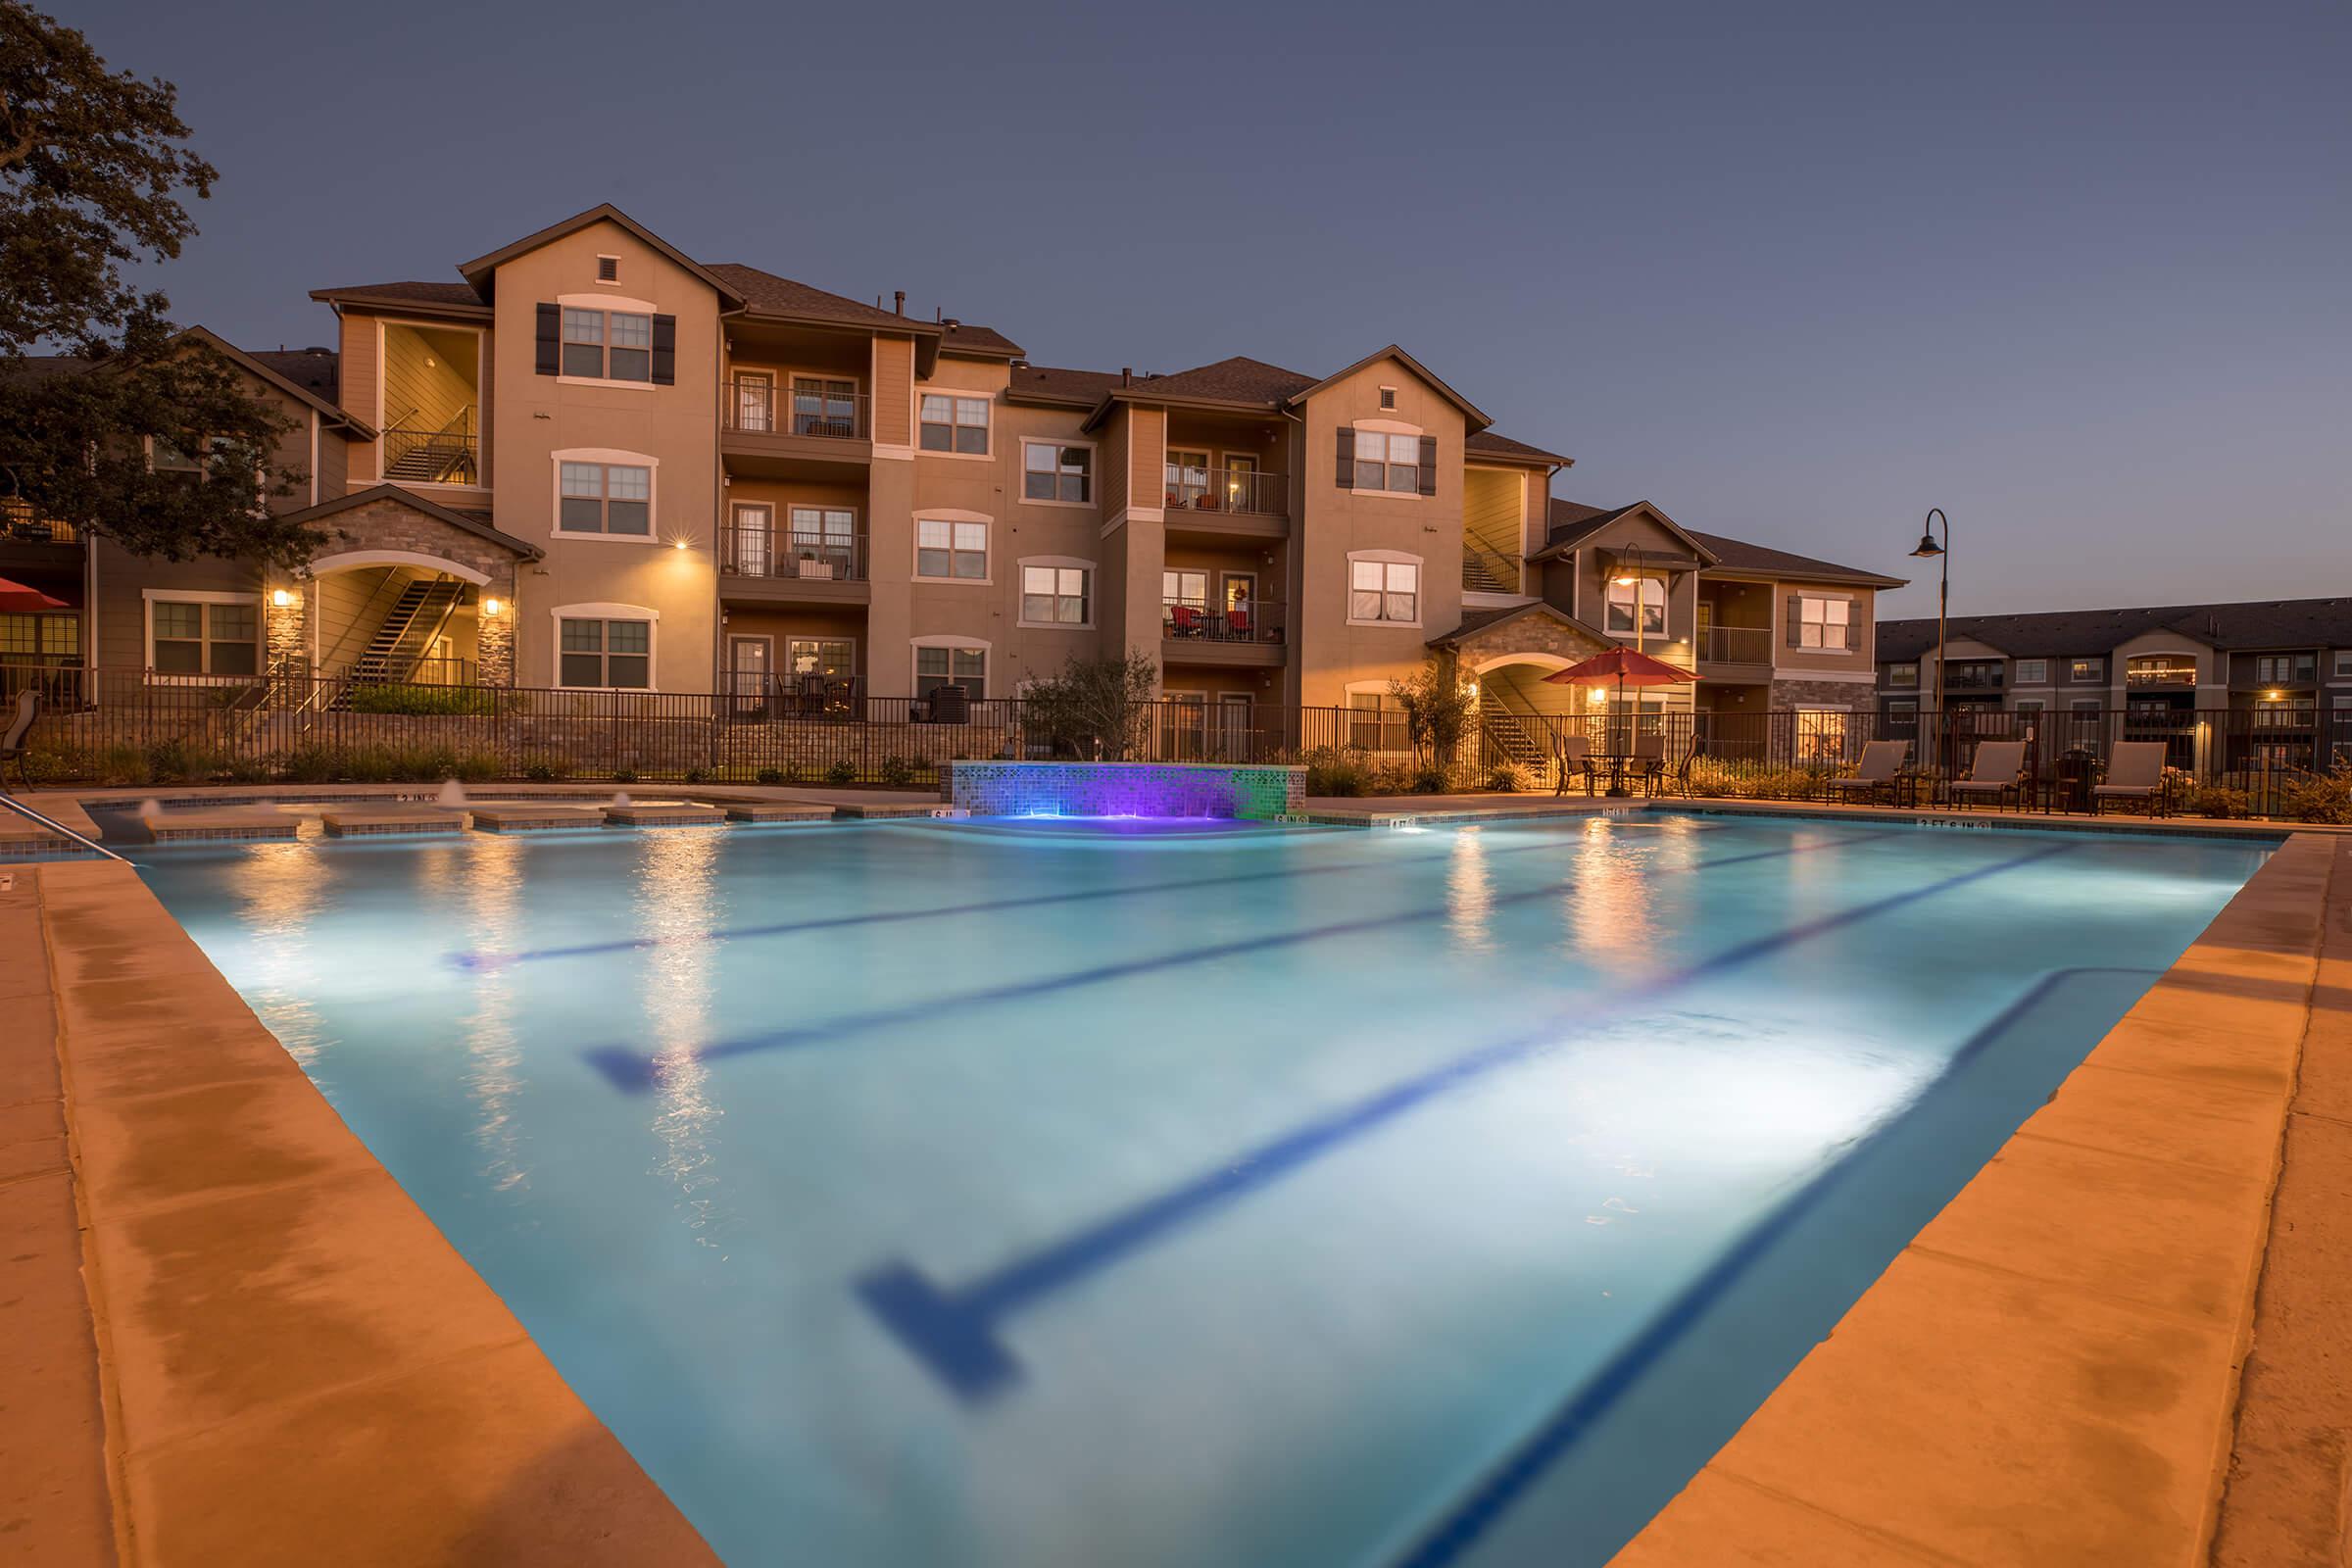 alt="swimming pool at night in Princenton, TX at Cypress Creek at Hazelwood Street"